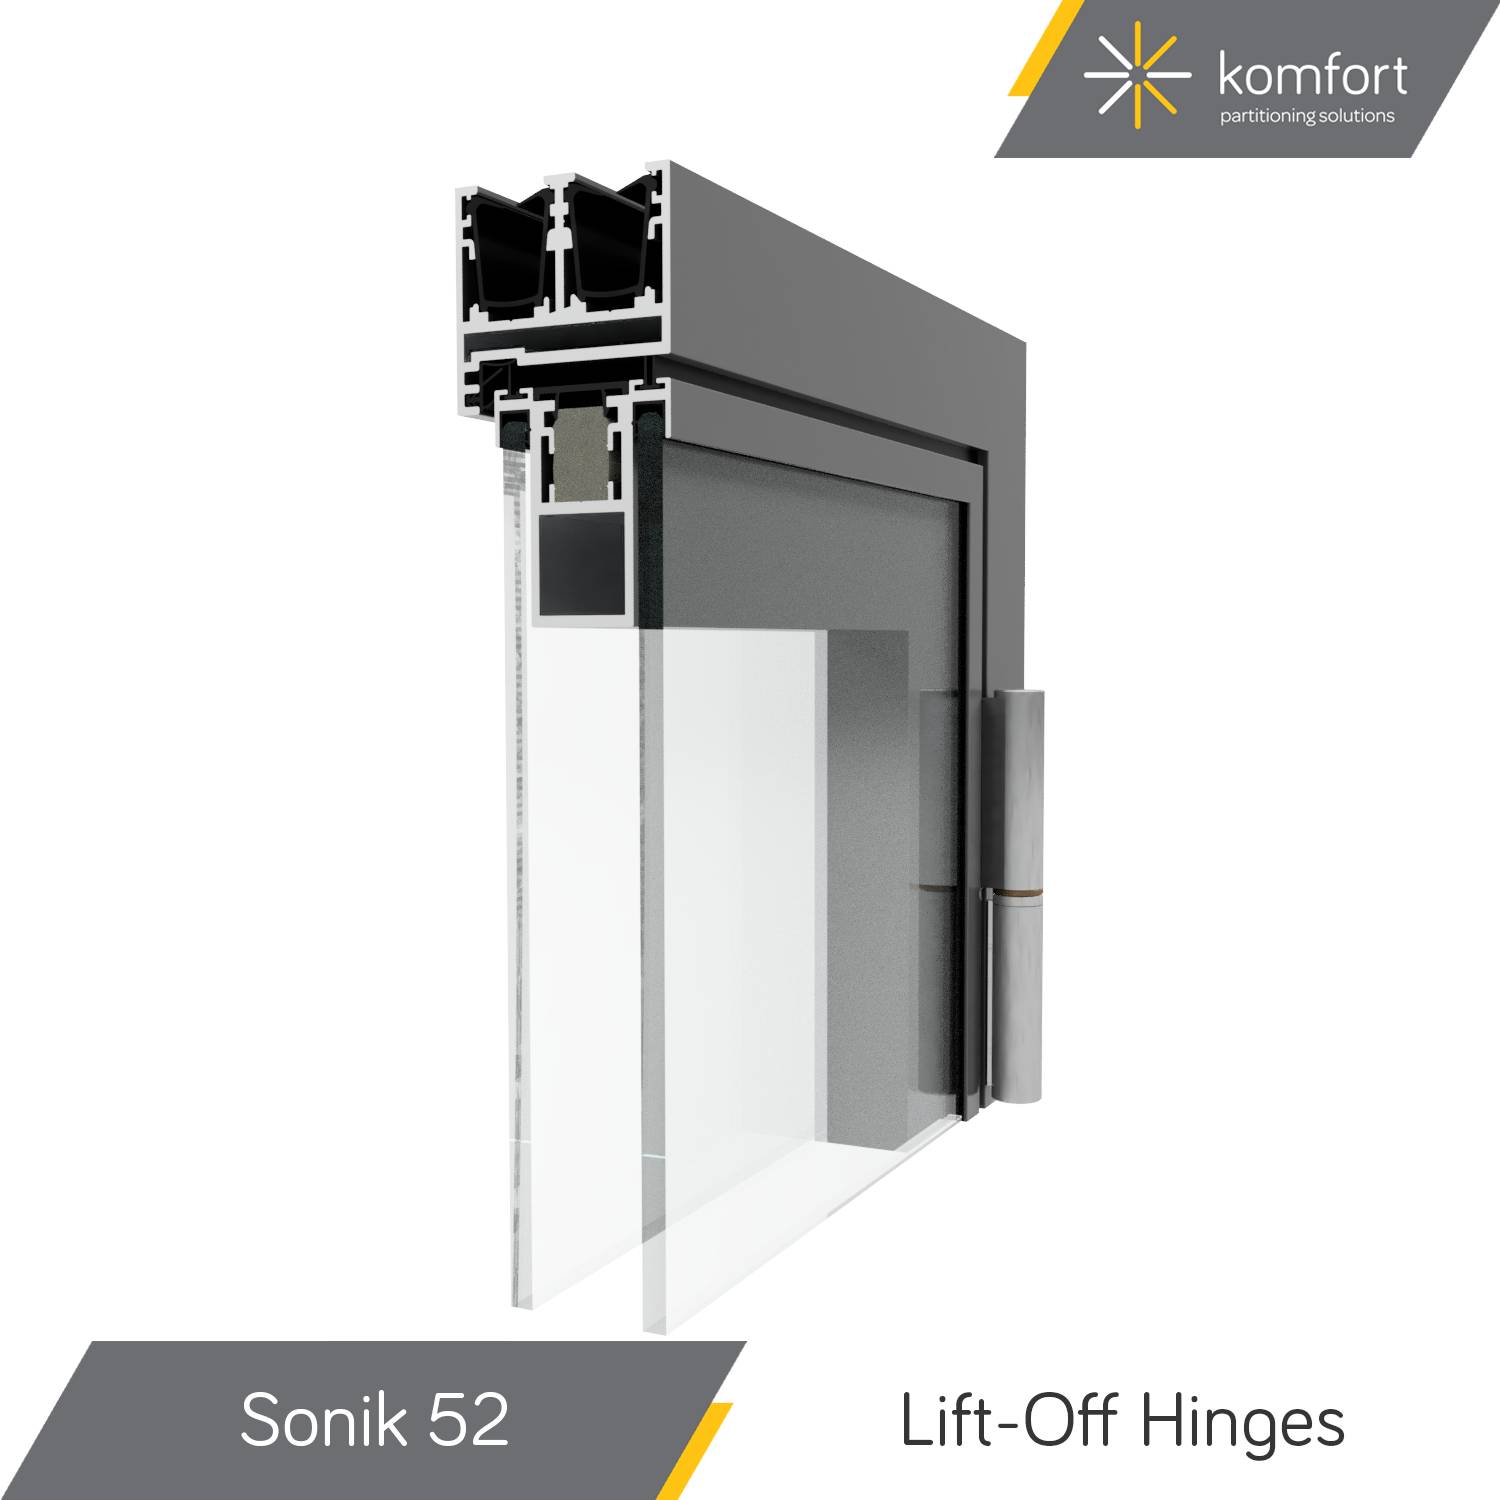 Komfort | Sonik 52 | Double Glazed 44 mm Aluminium Doorsets